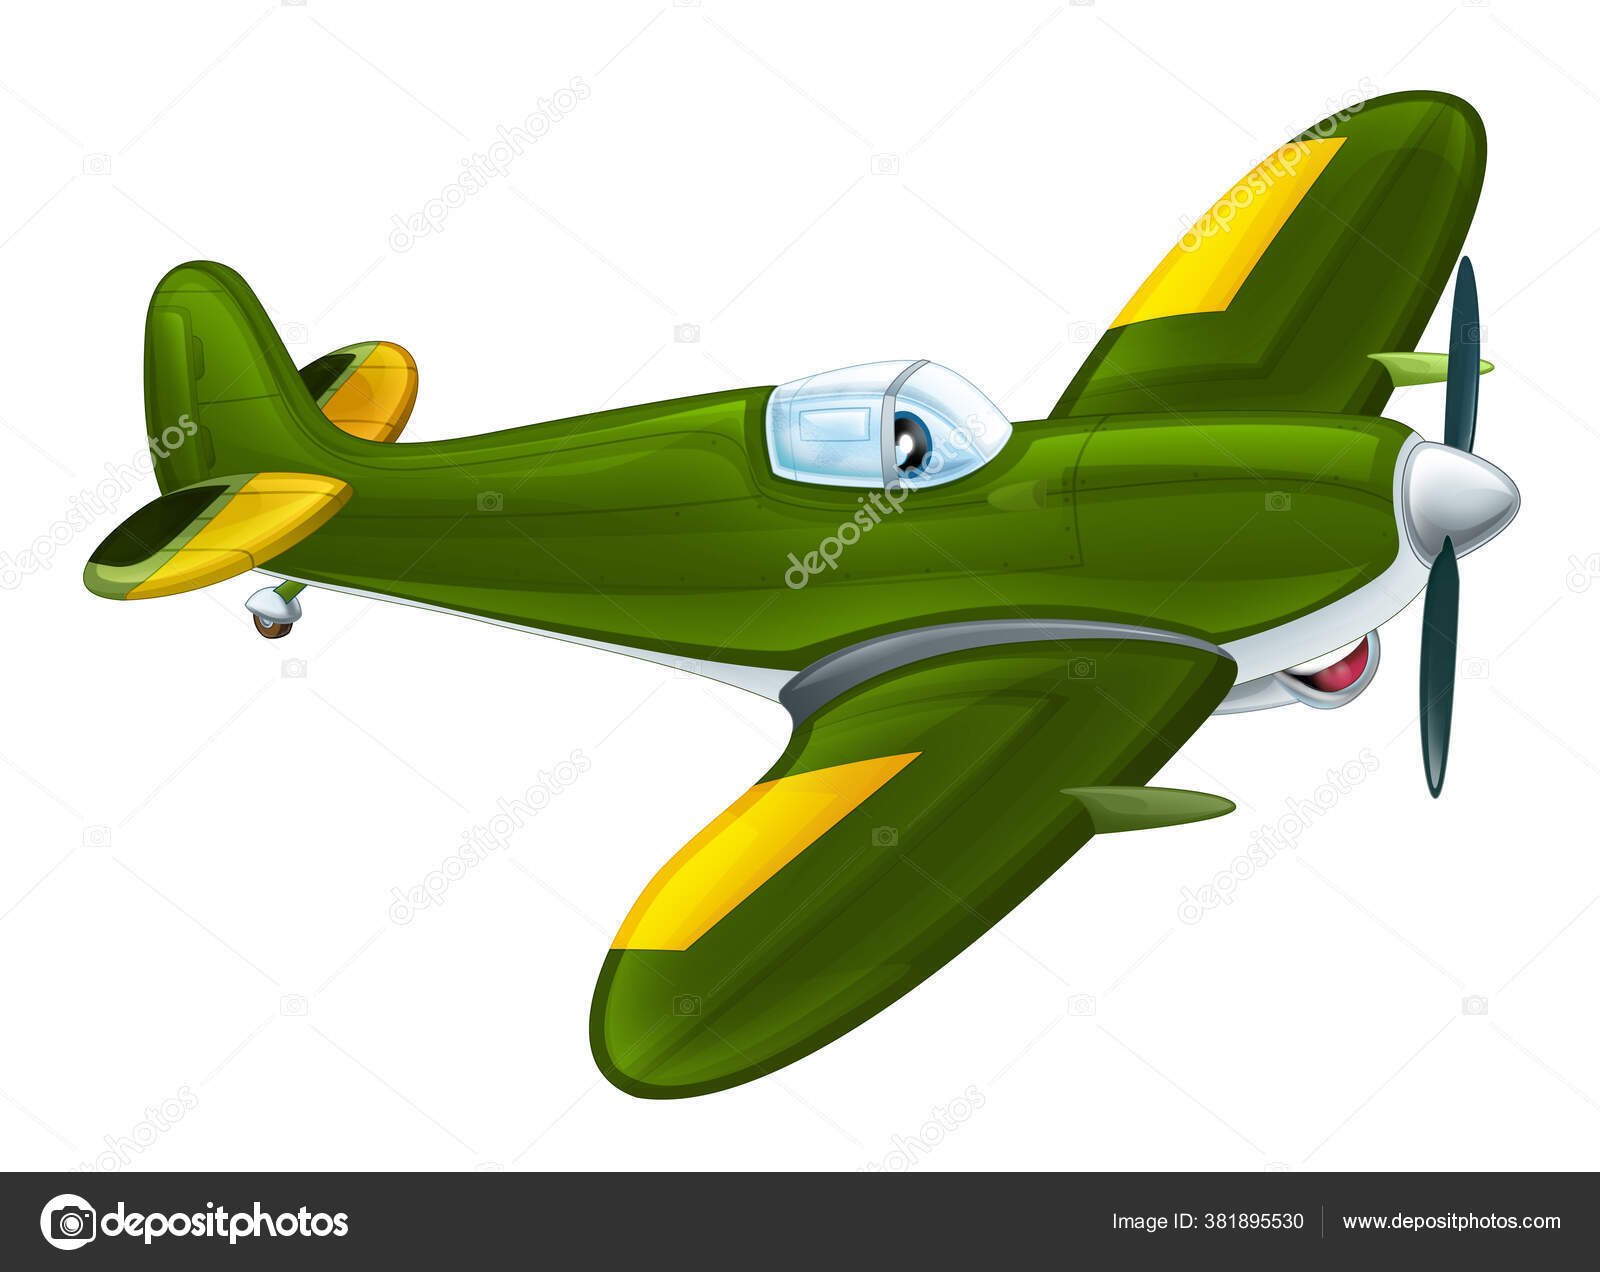 Cartoon Happy Military Plane Machine White Background Illustration Children  Stock Photo by ©illustrator_hft 381895530